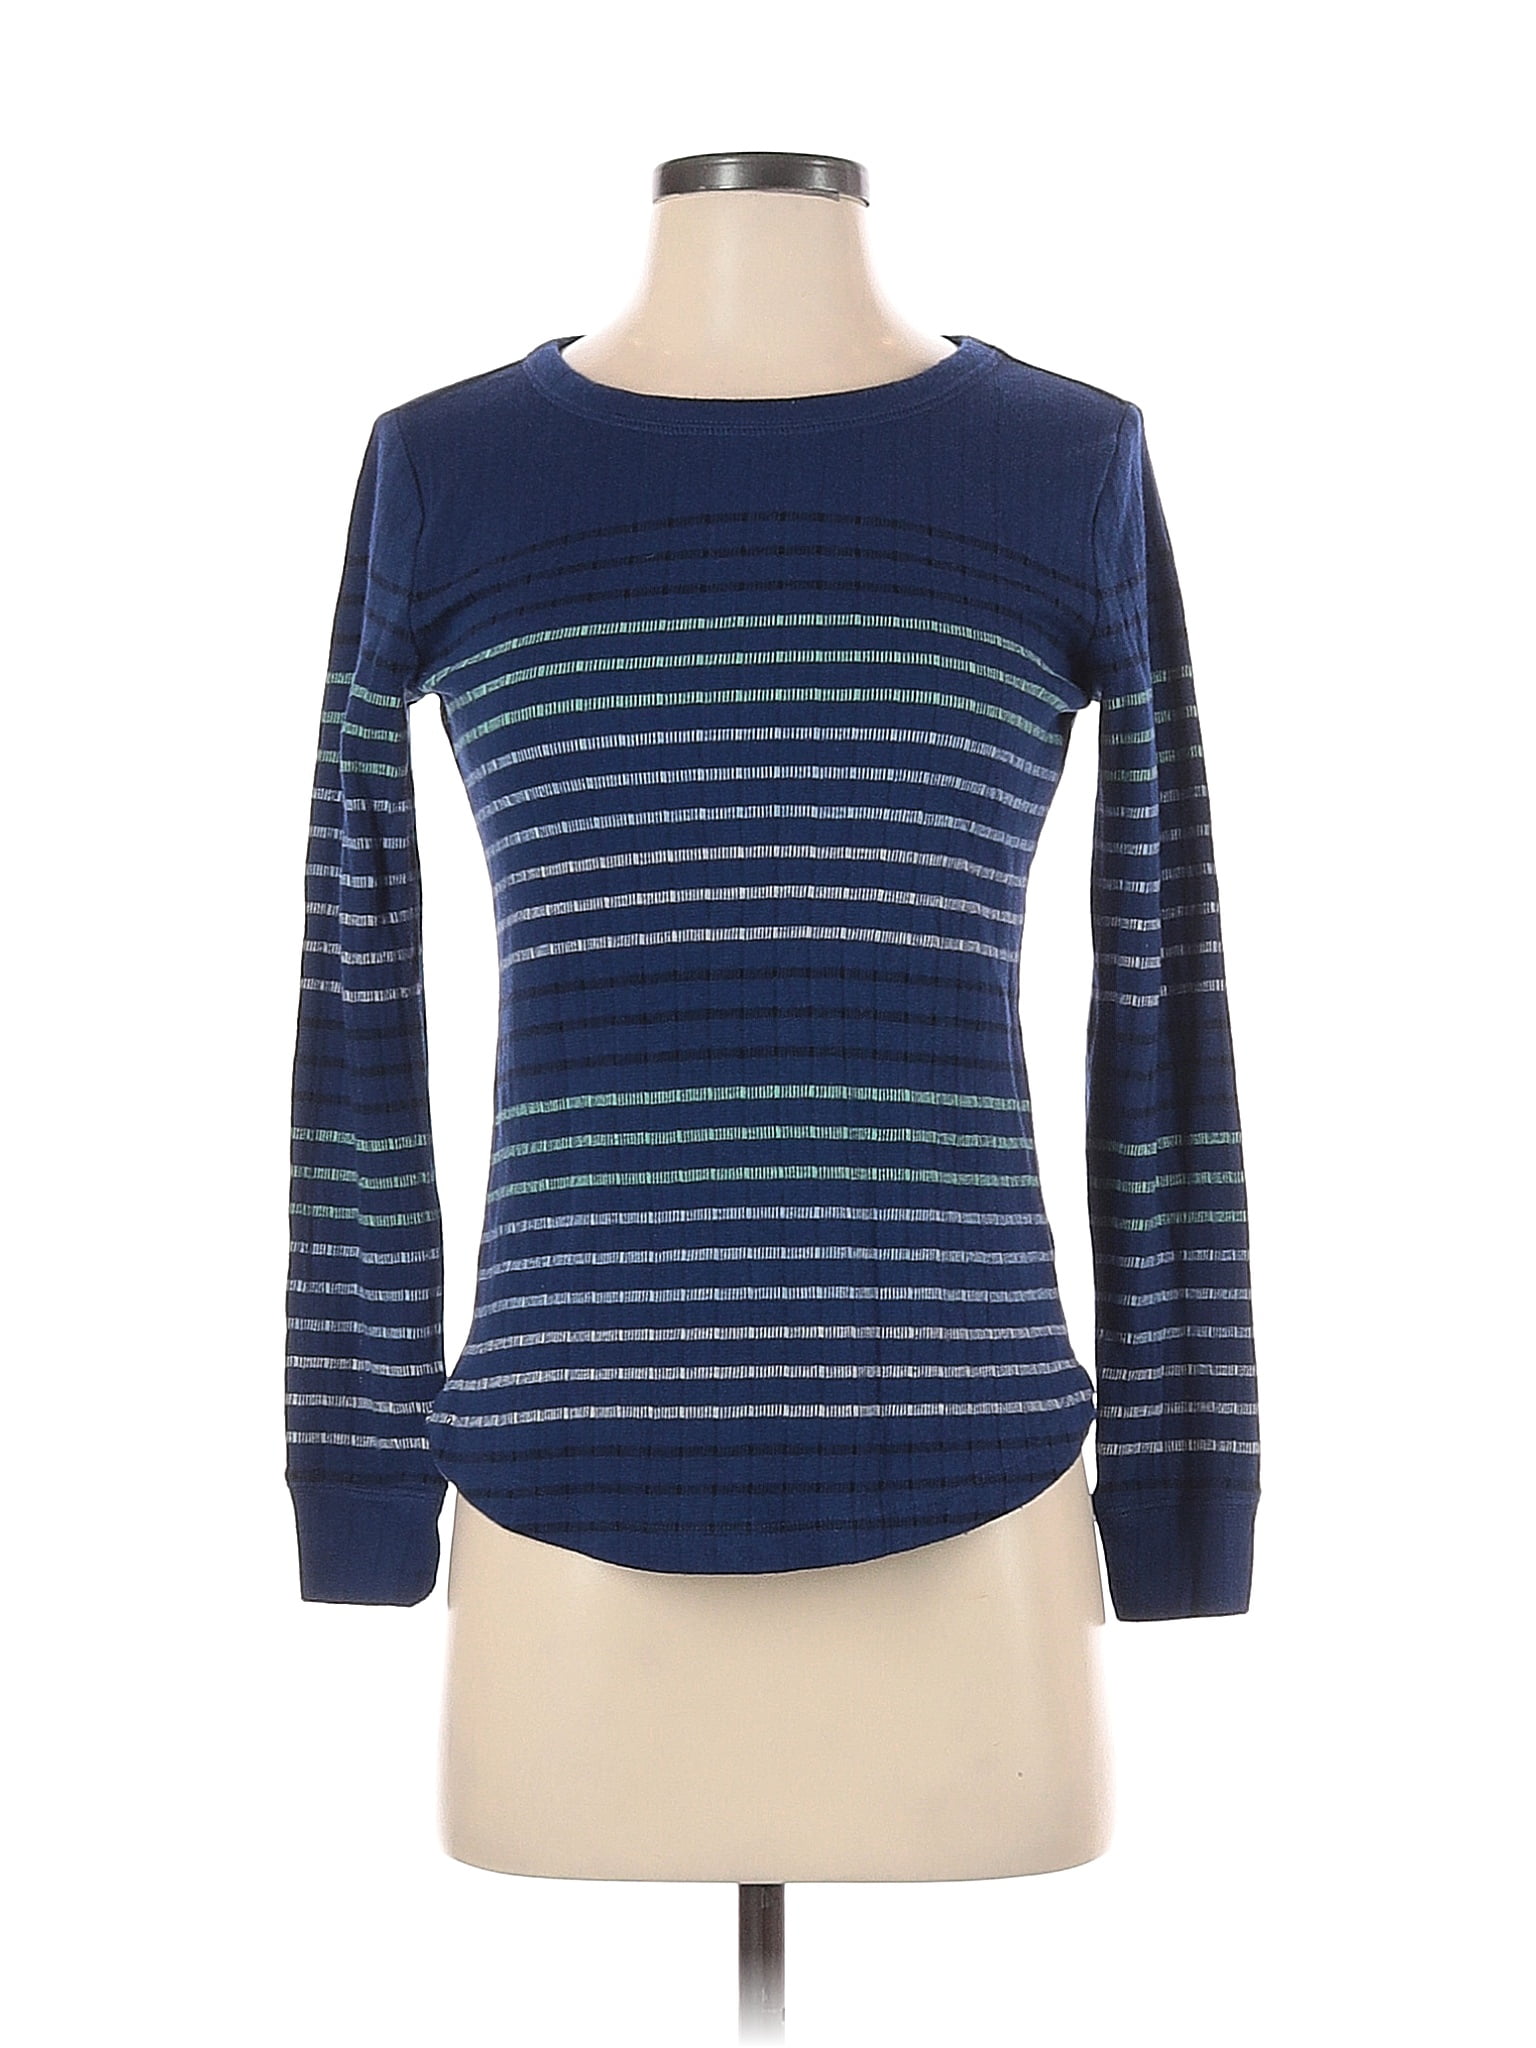 T by Talbots Color Block Stripes Blue Sweatshirt Size S (Petite) - 88% ...